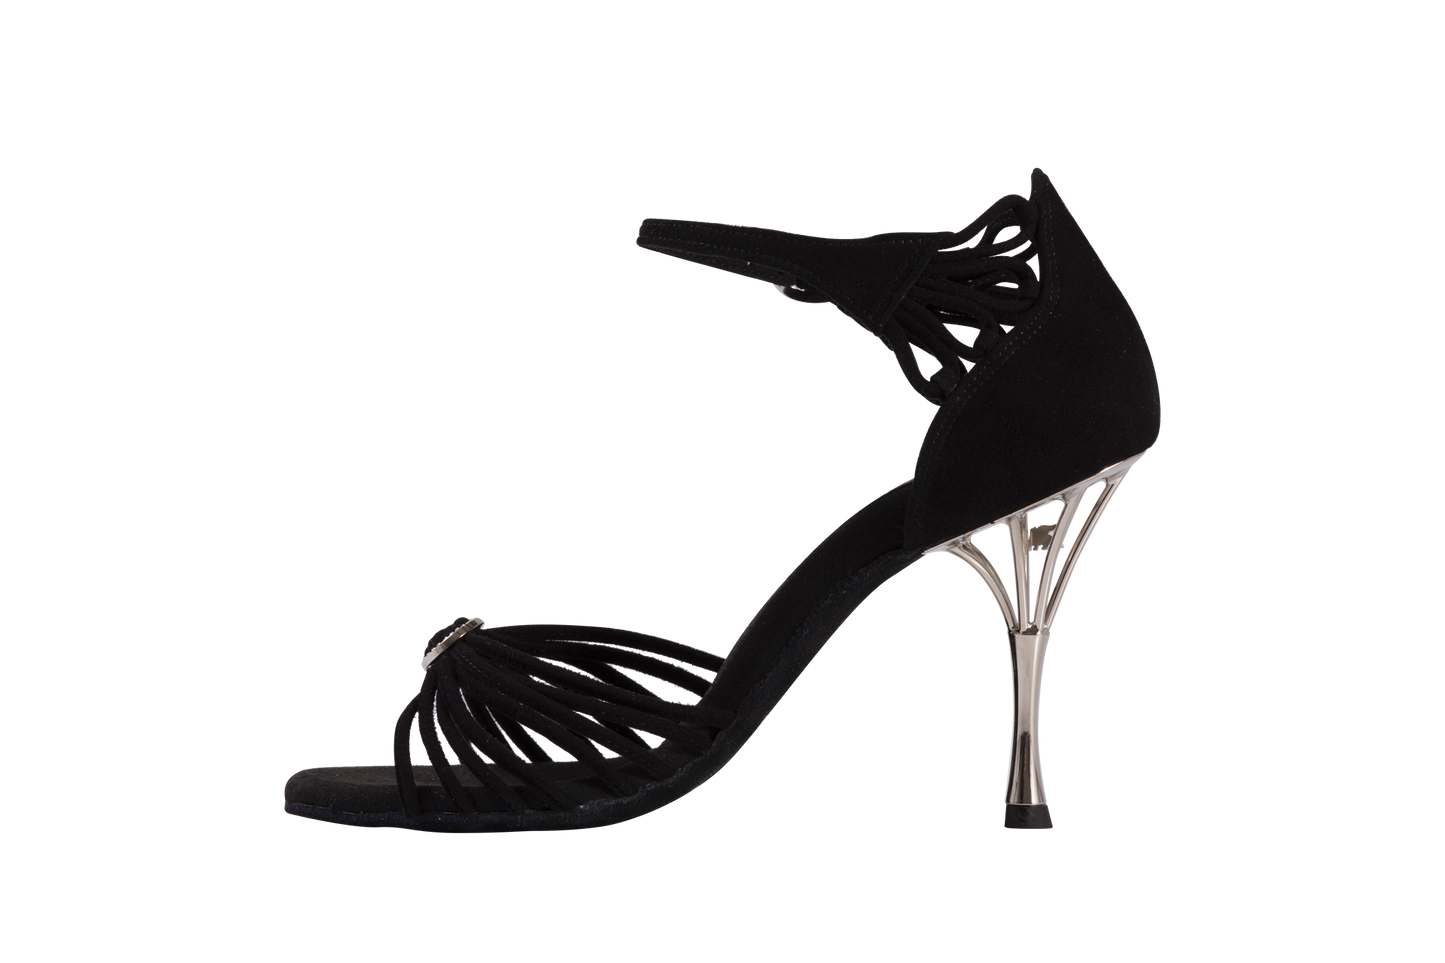 Dance Naturals 883/884 Venere Black Suede Multi-Strap Latin Shoe with Swarovski Buckles and Flower-Shaped Embellishment on Heel